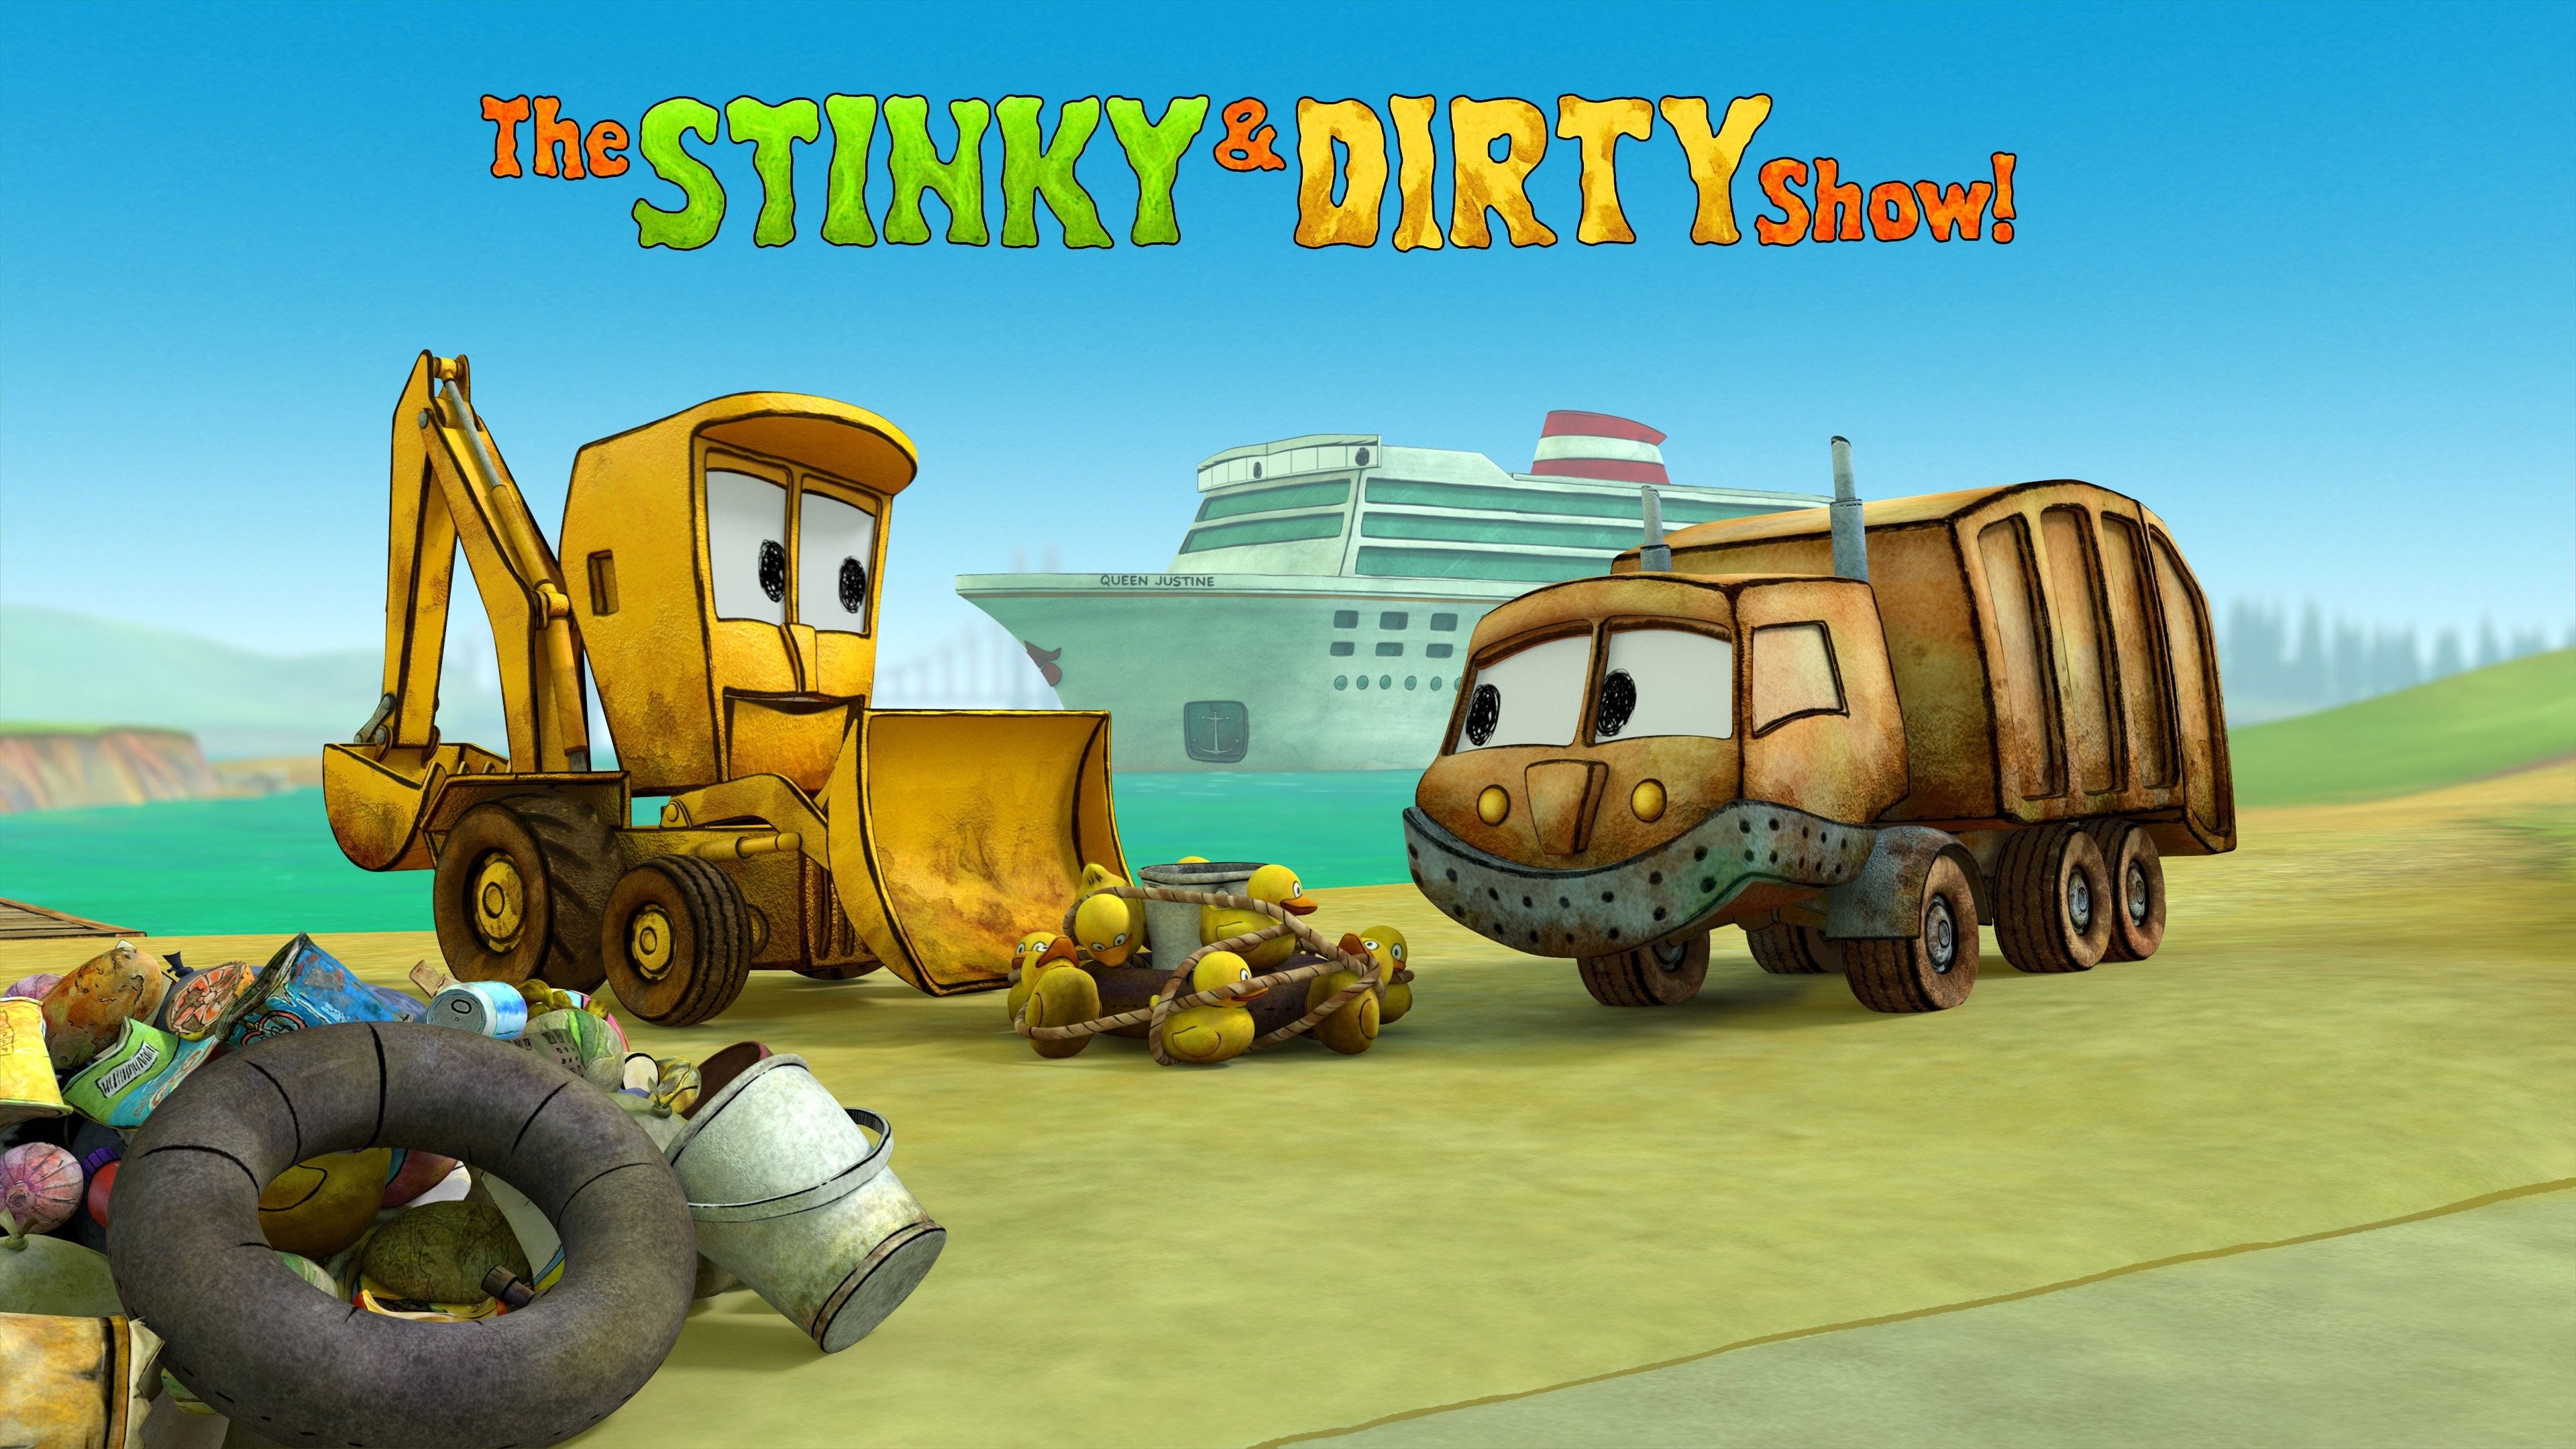 The Stinky & Dirty Show Season 1